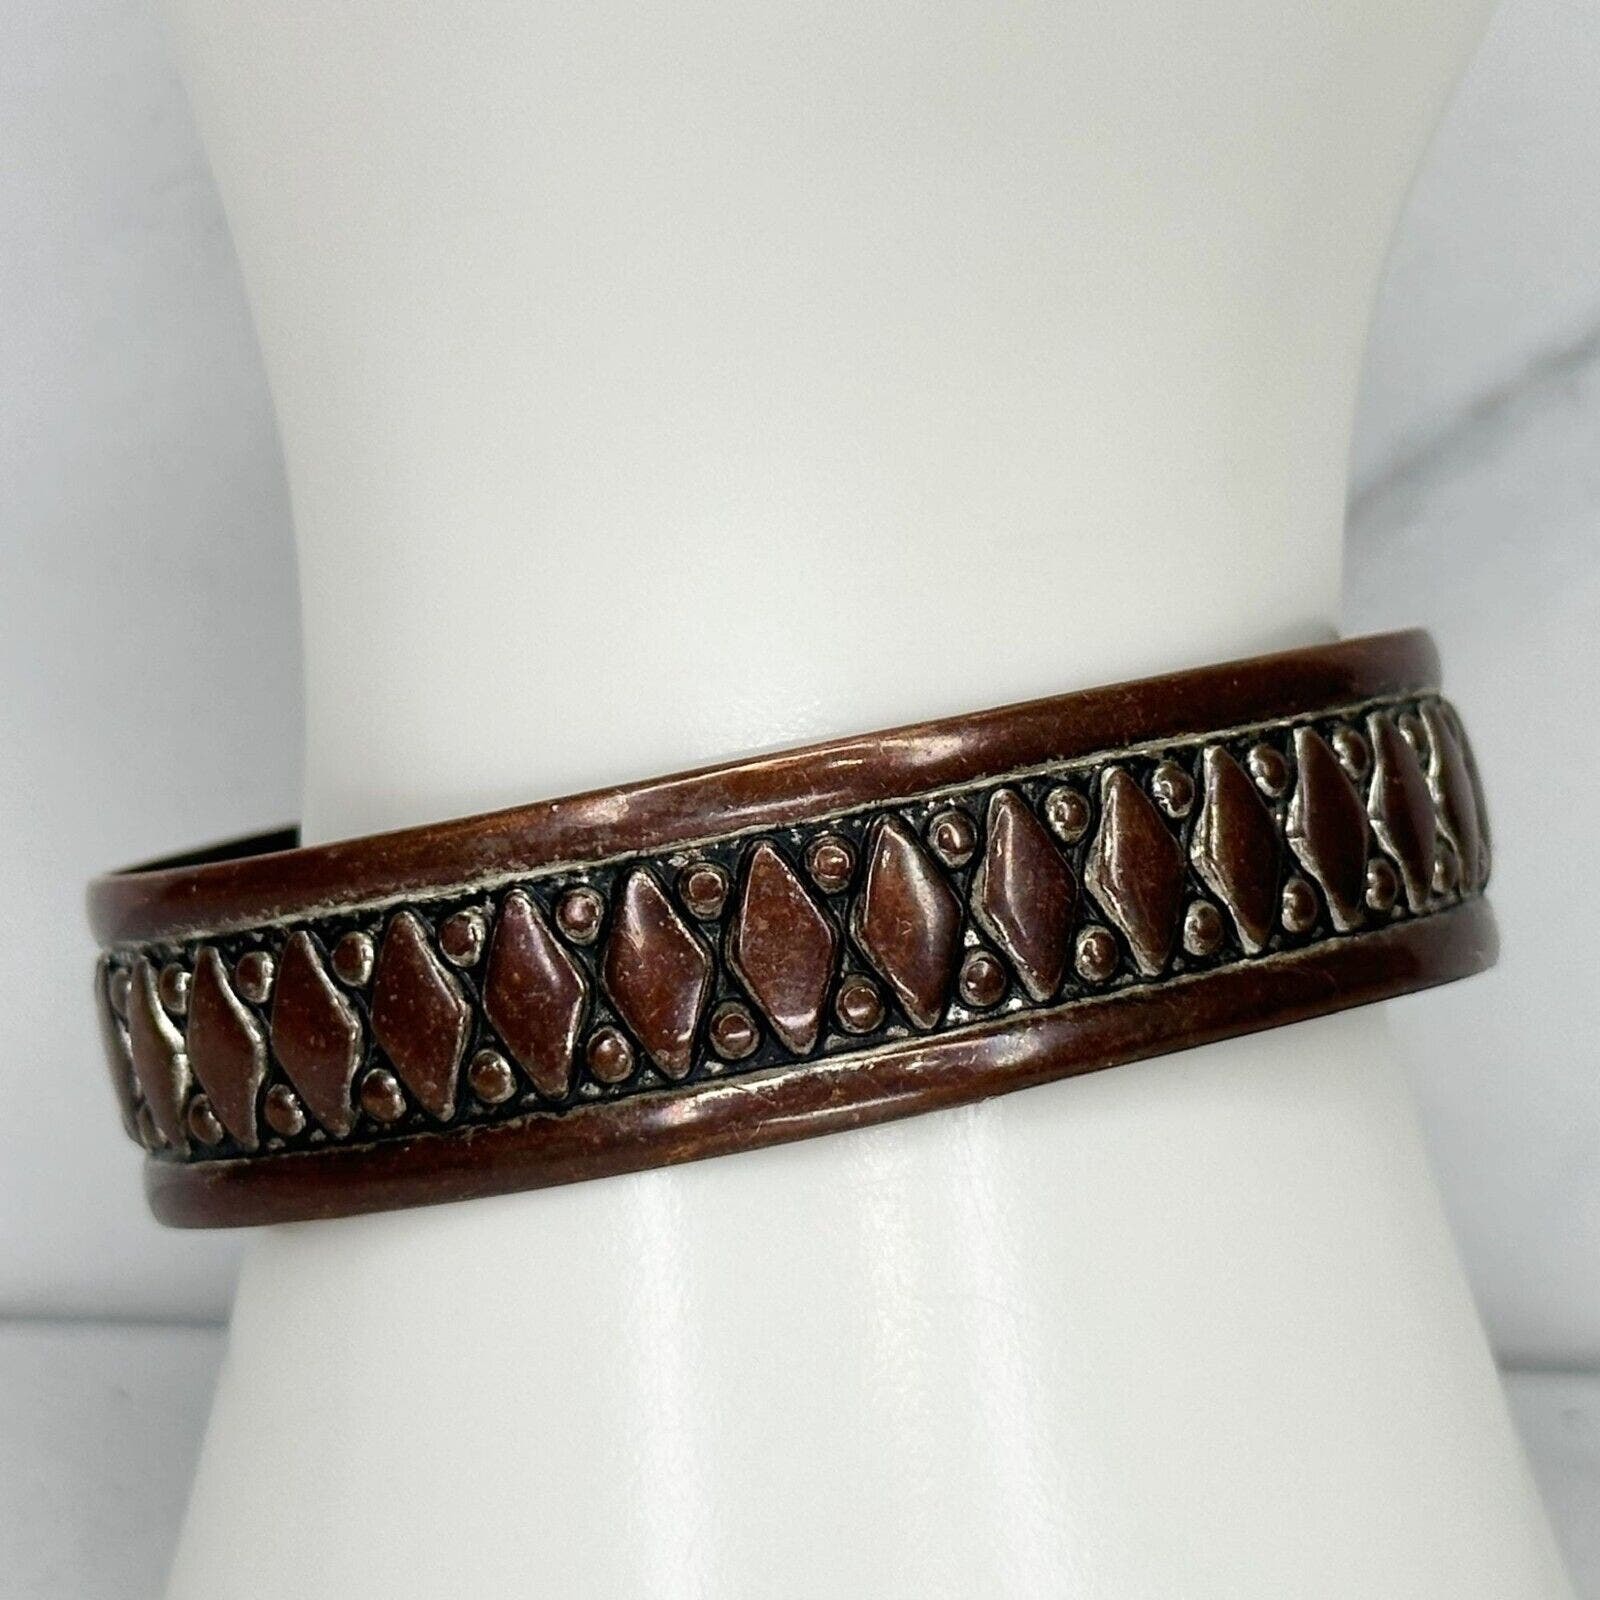 Primary image for Vintage Distressed Studded Cuff Bracelet